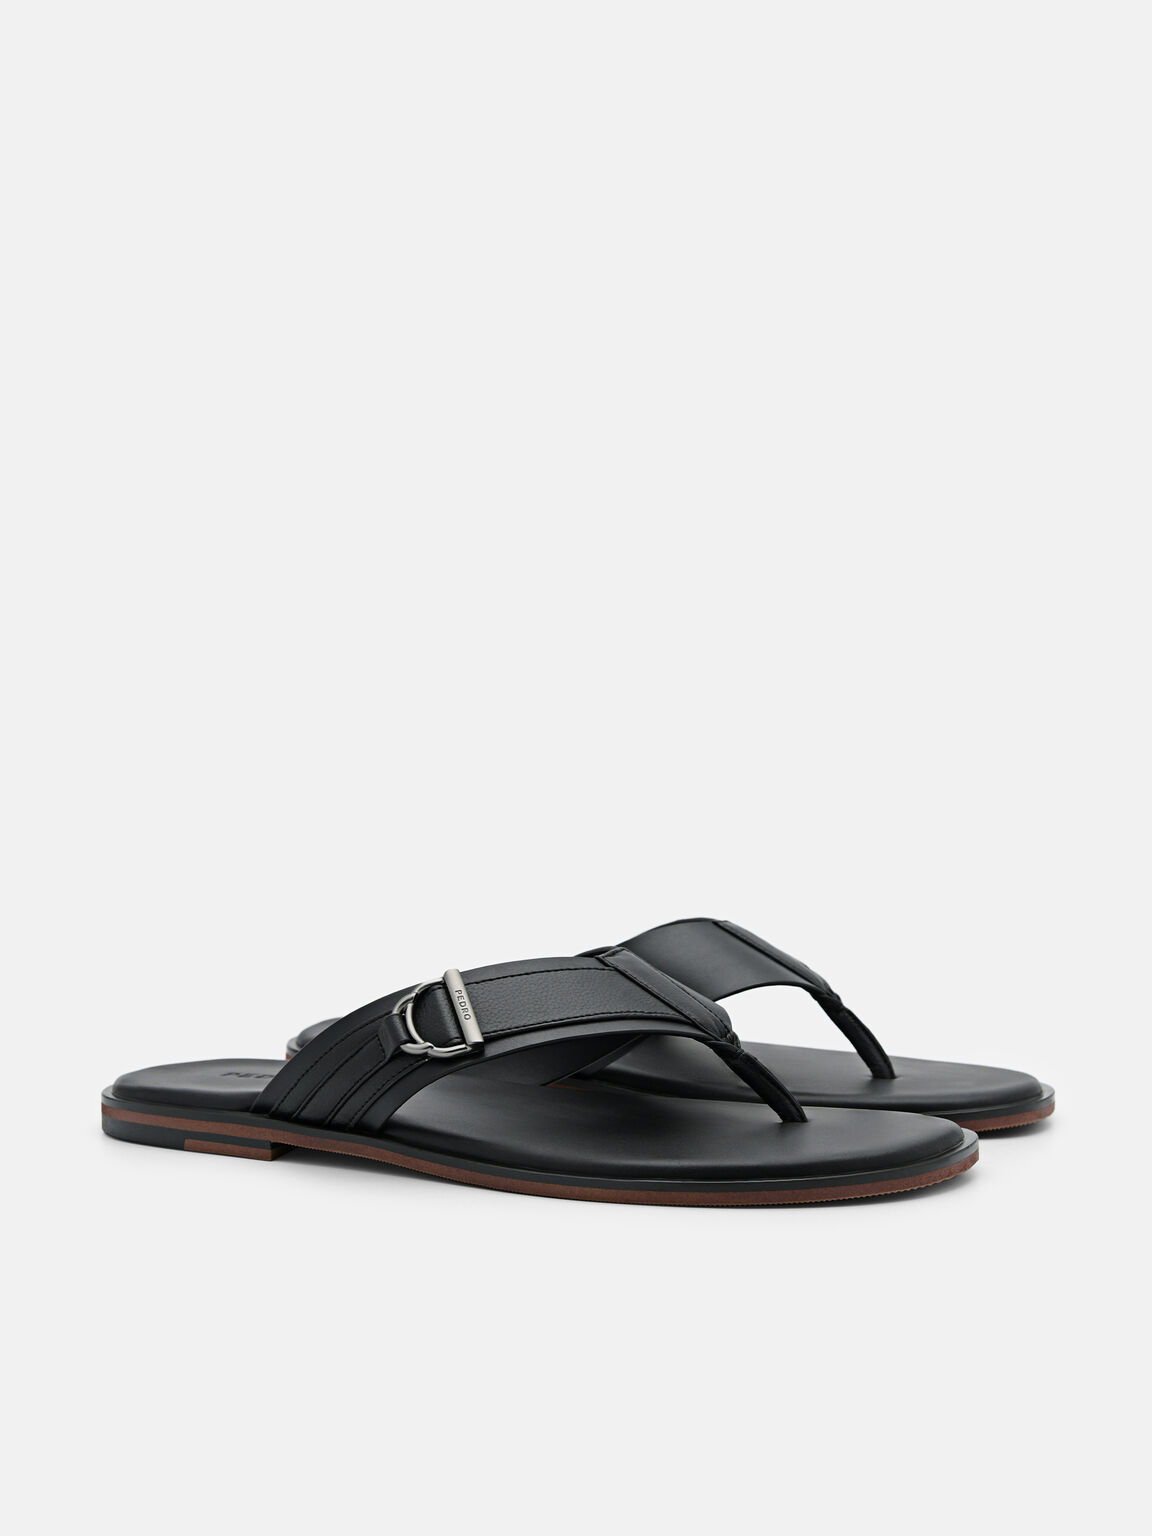 Jackson Thong Sandals, Black, hi-res